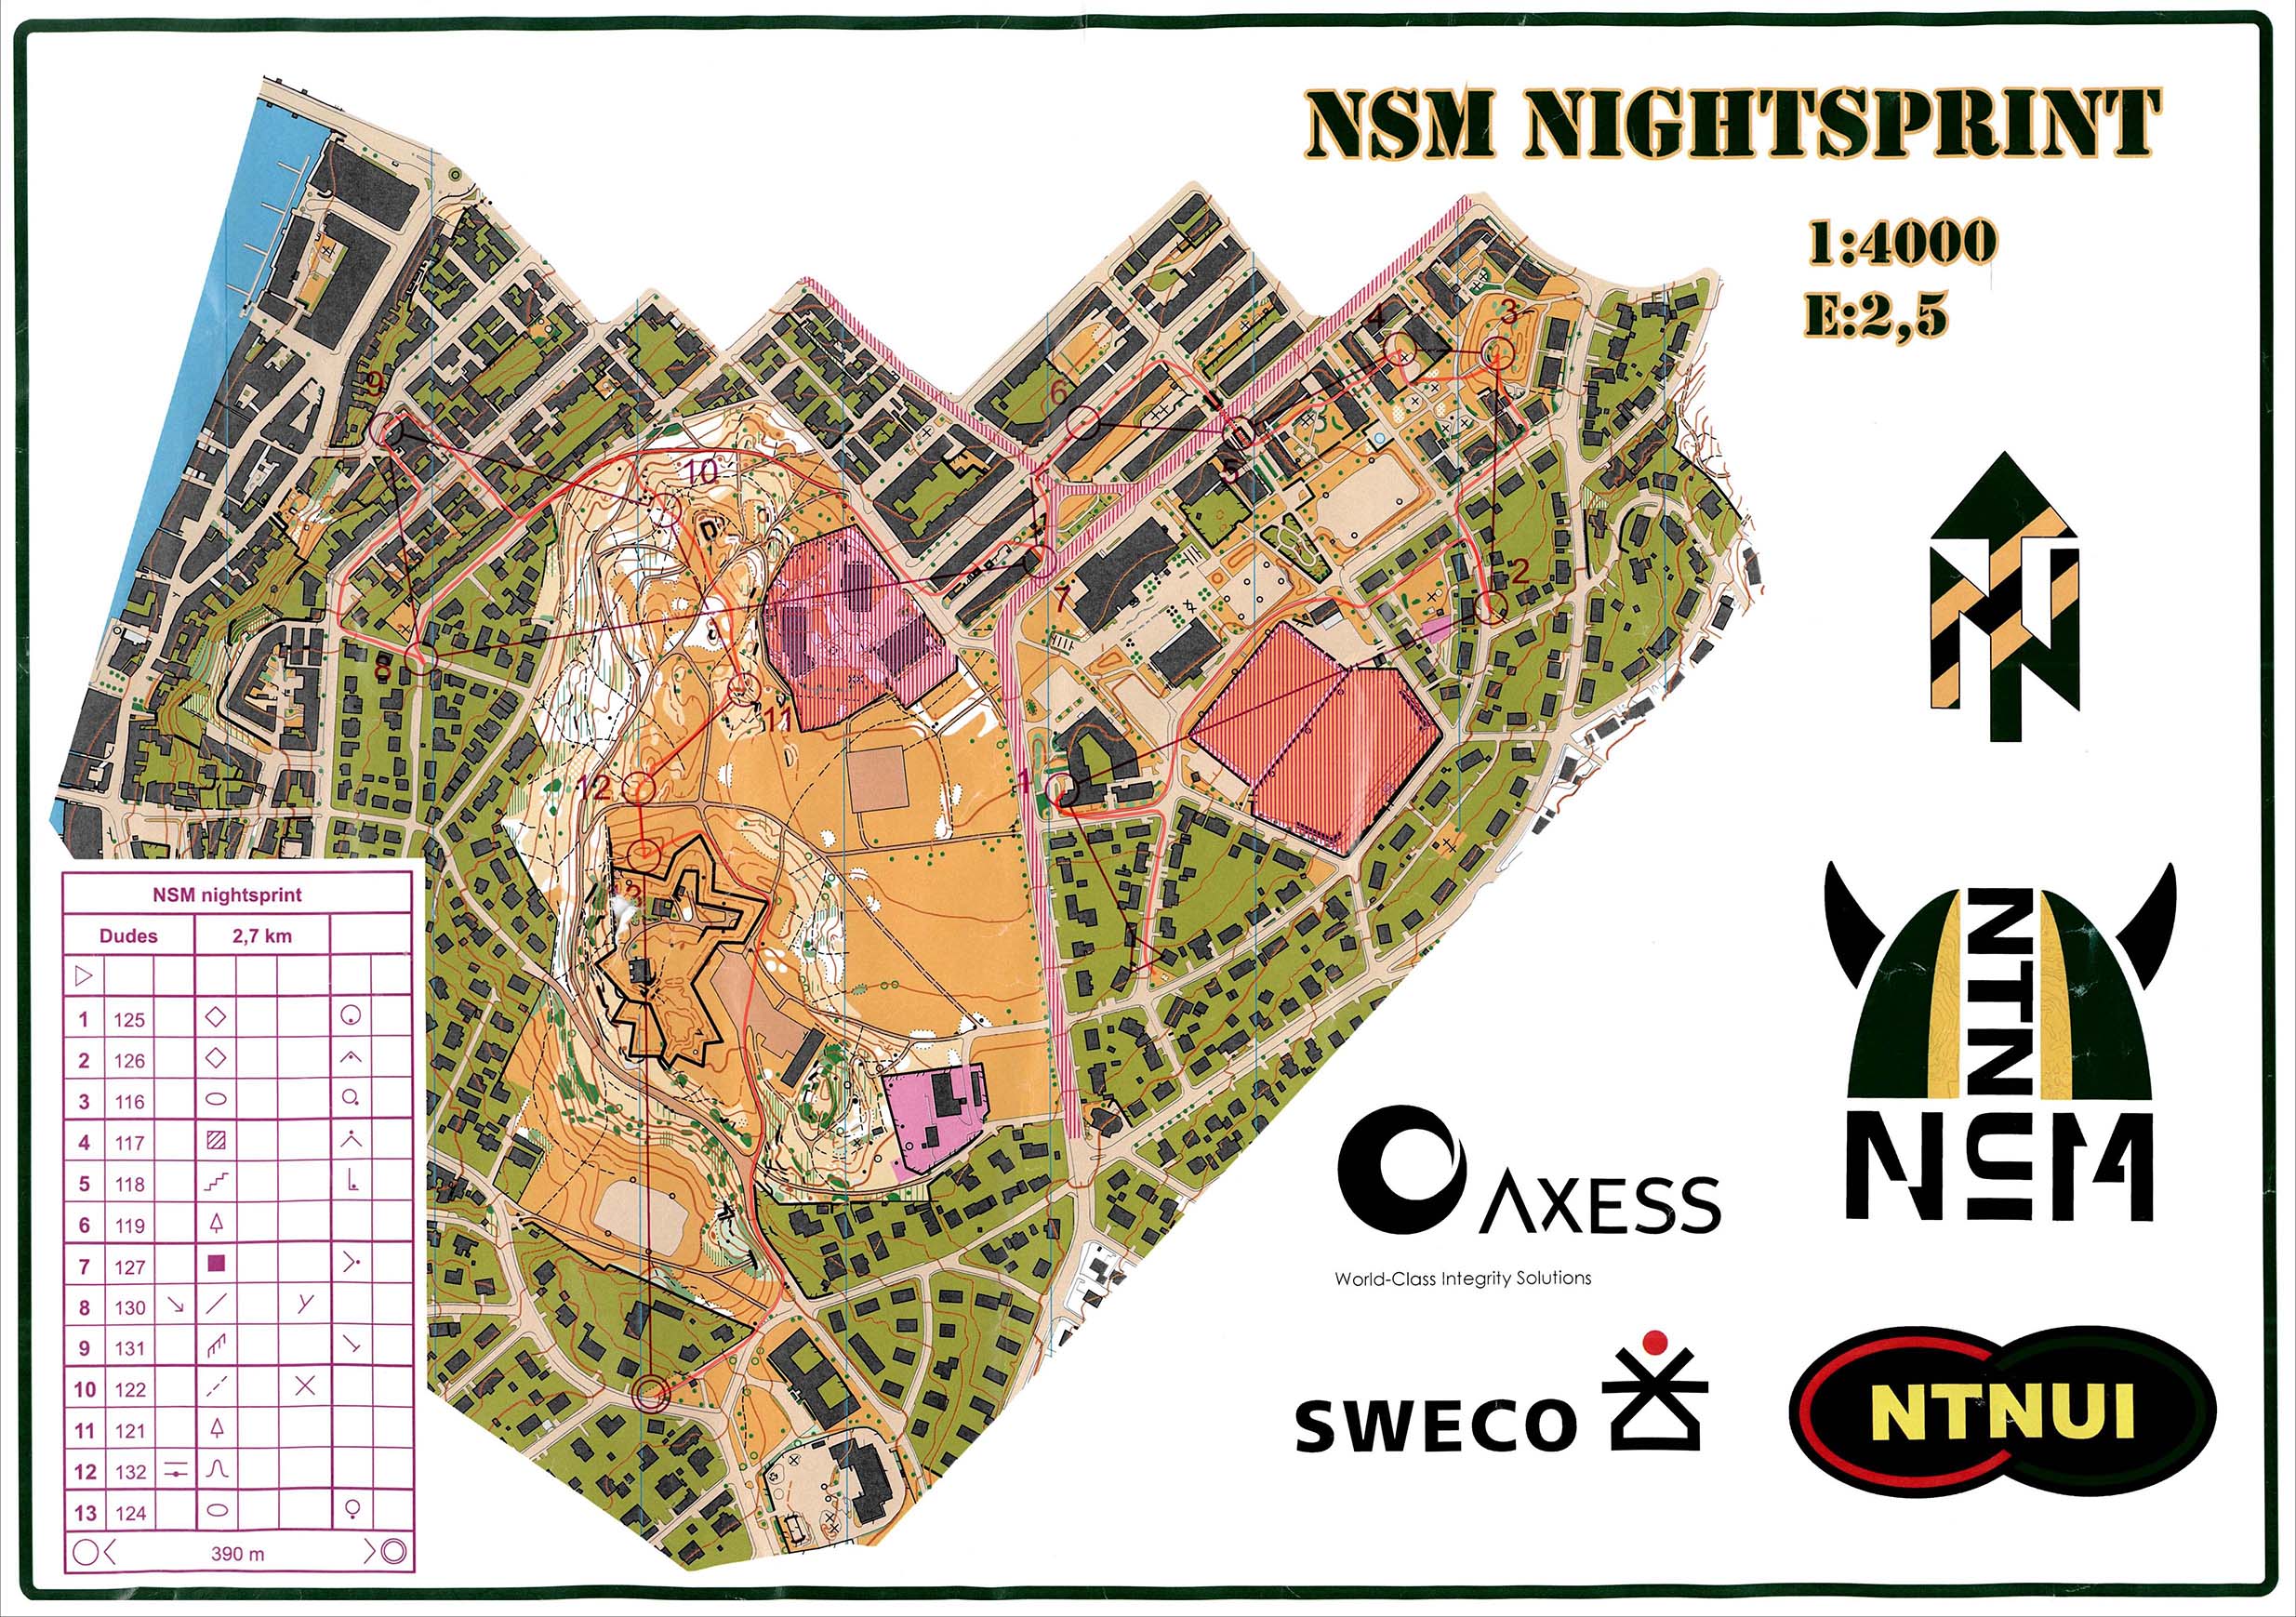 NSM Night sprint (31-10-2014)